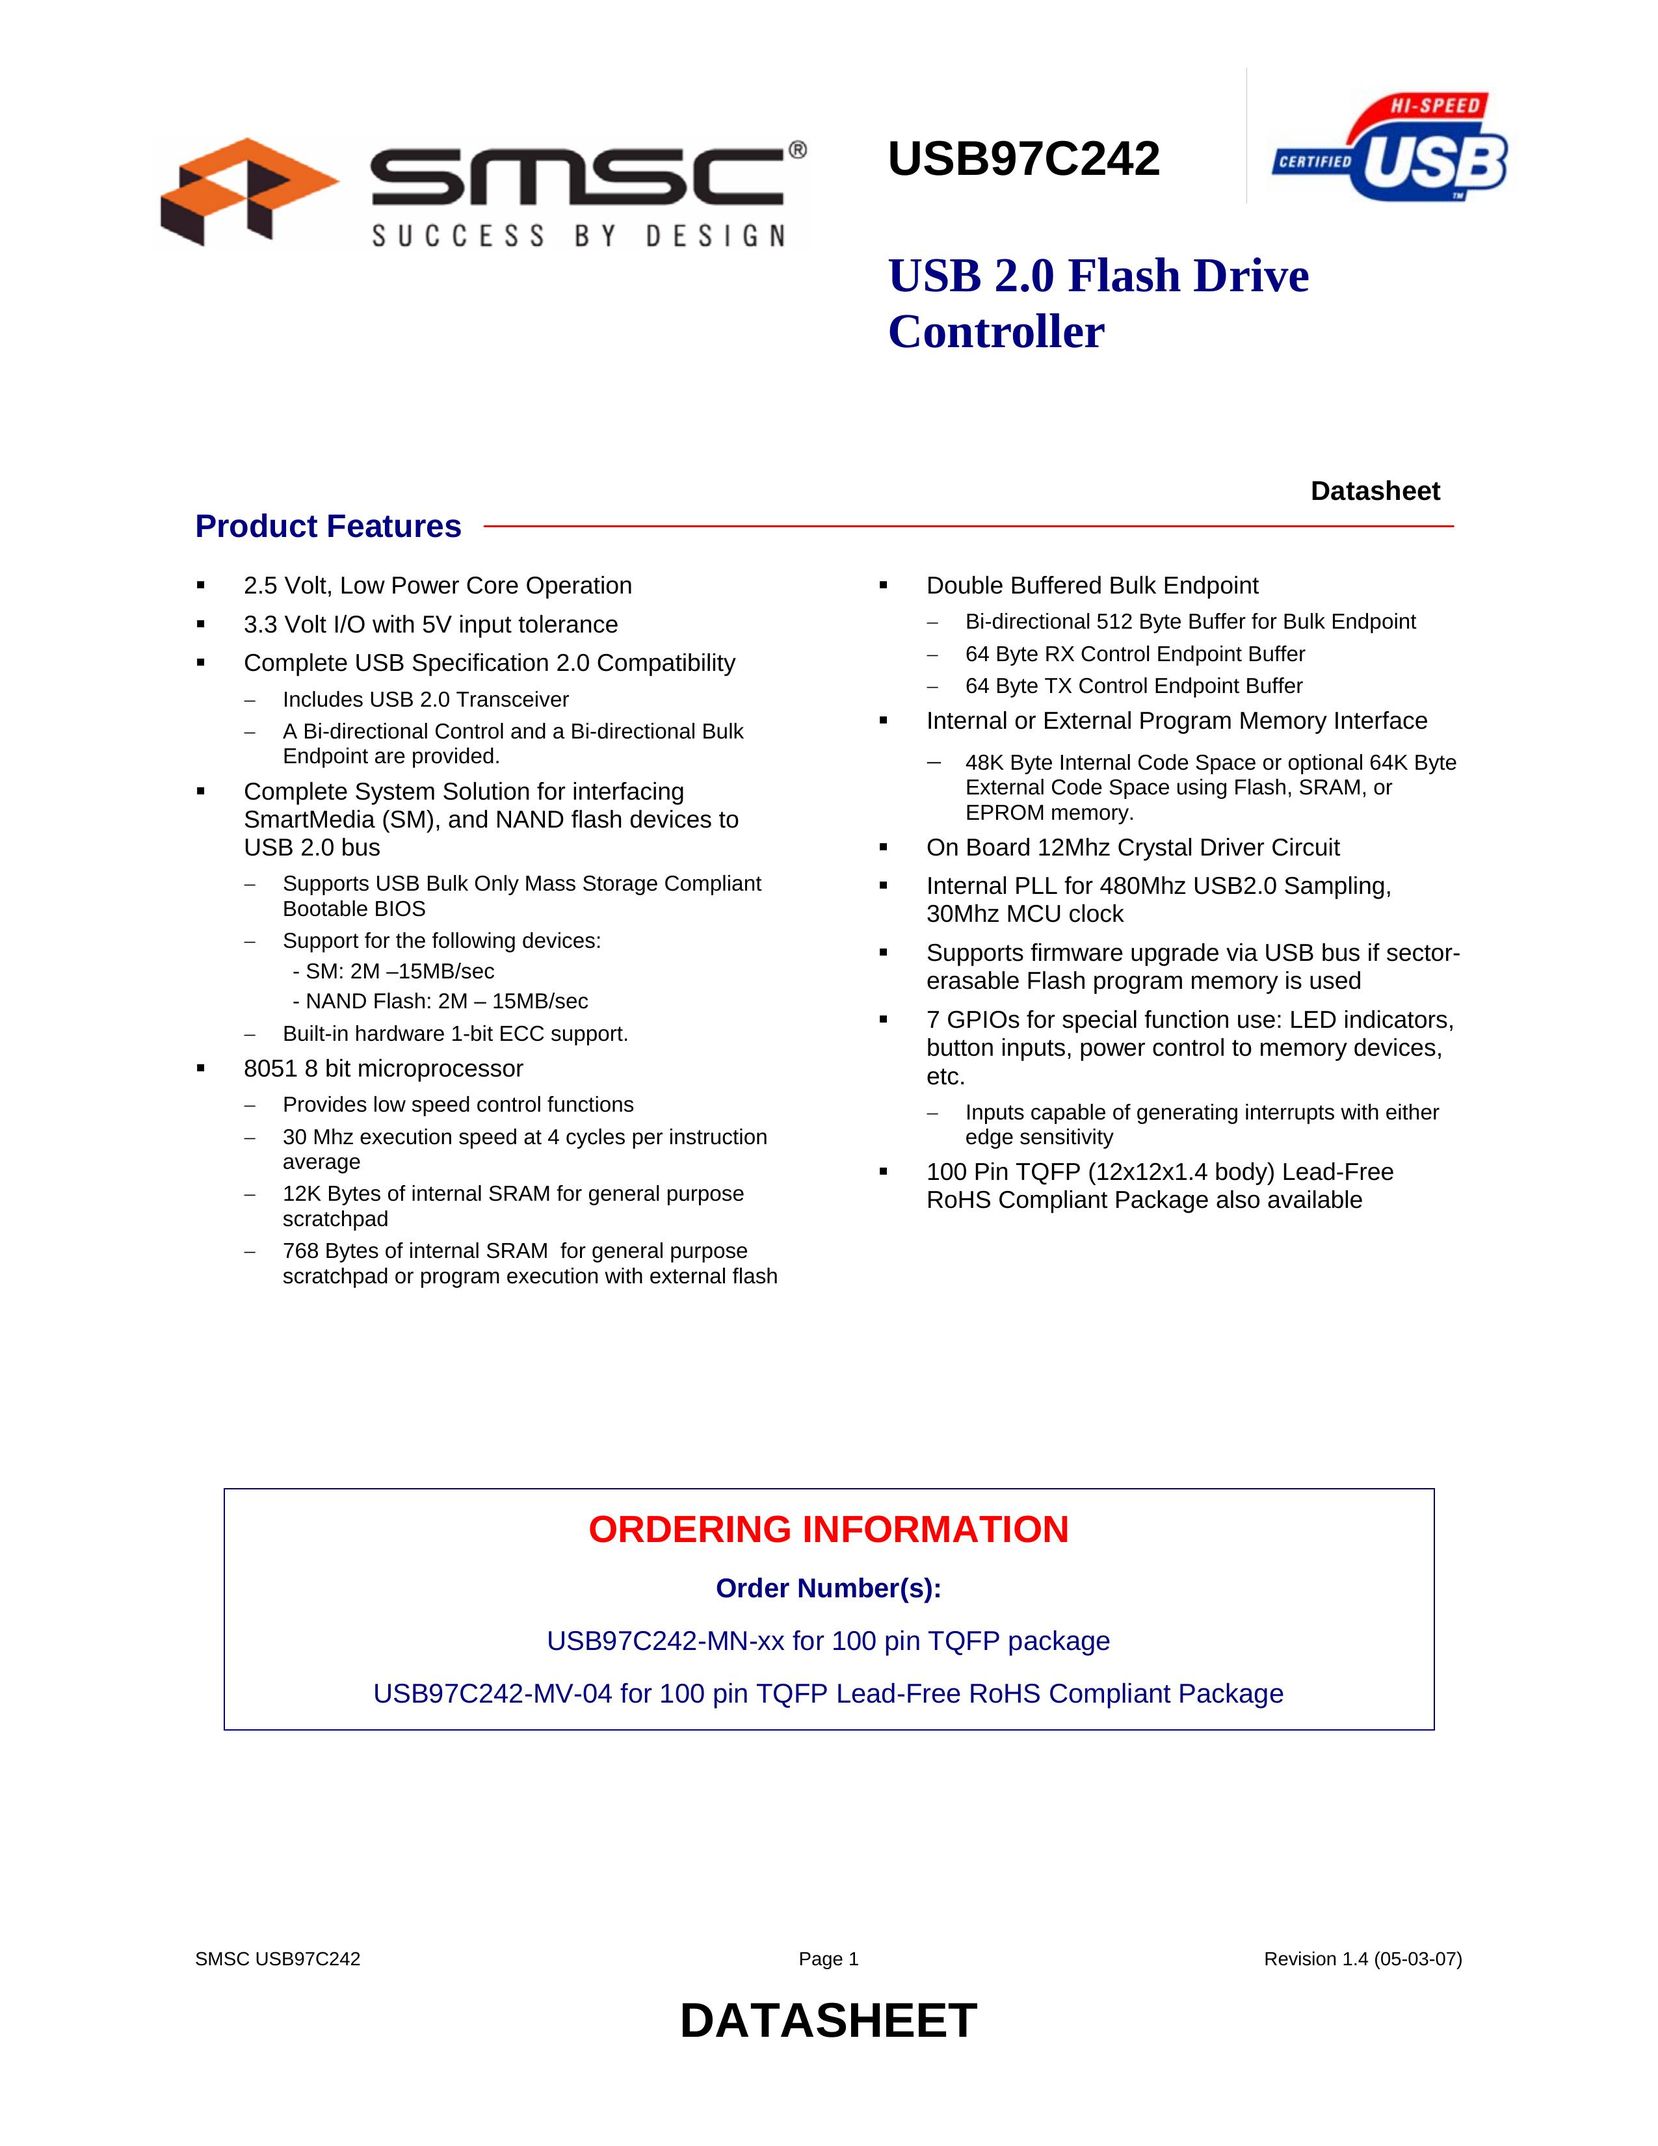 SMSC USB97C242 Network Card User Manual